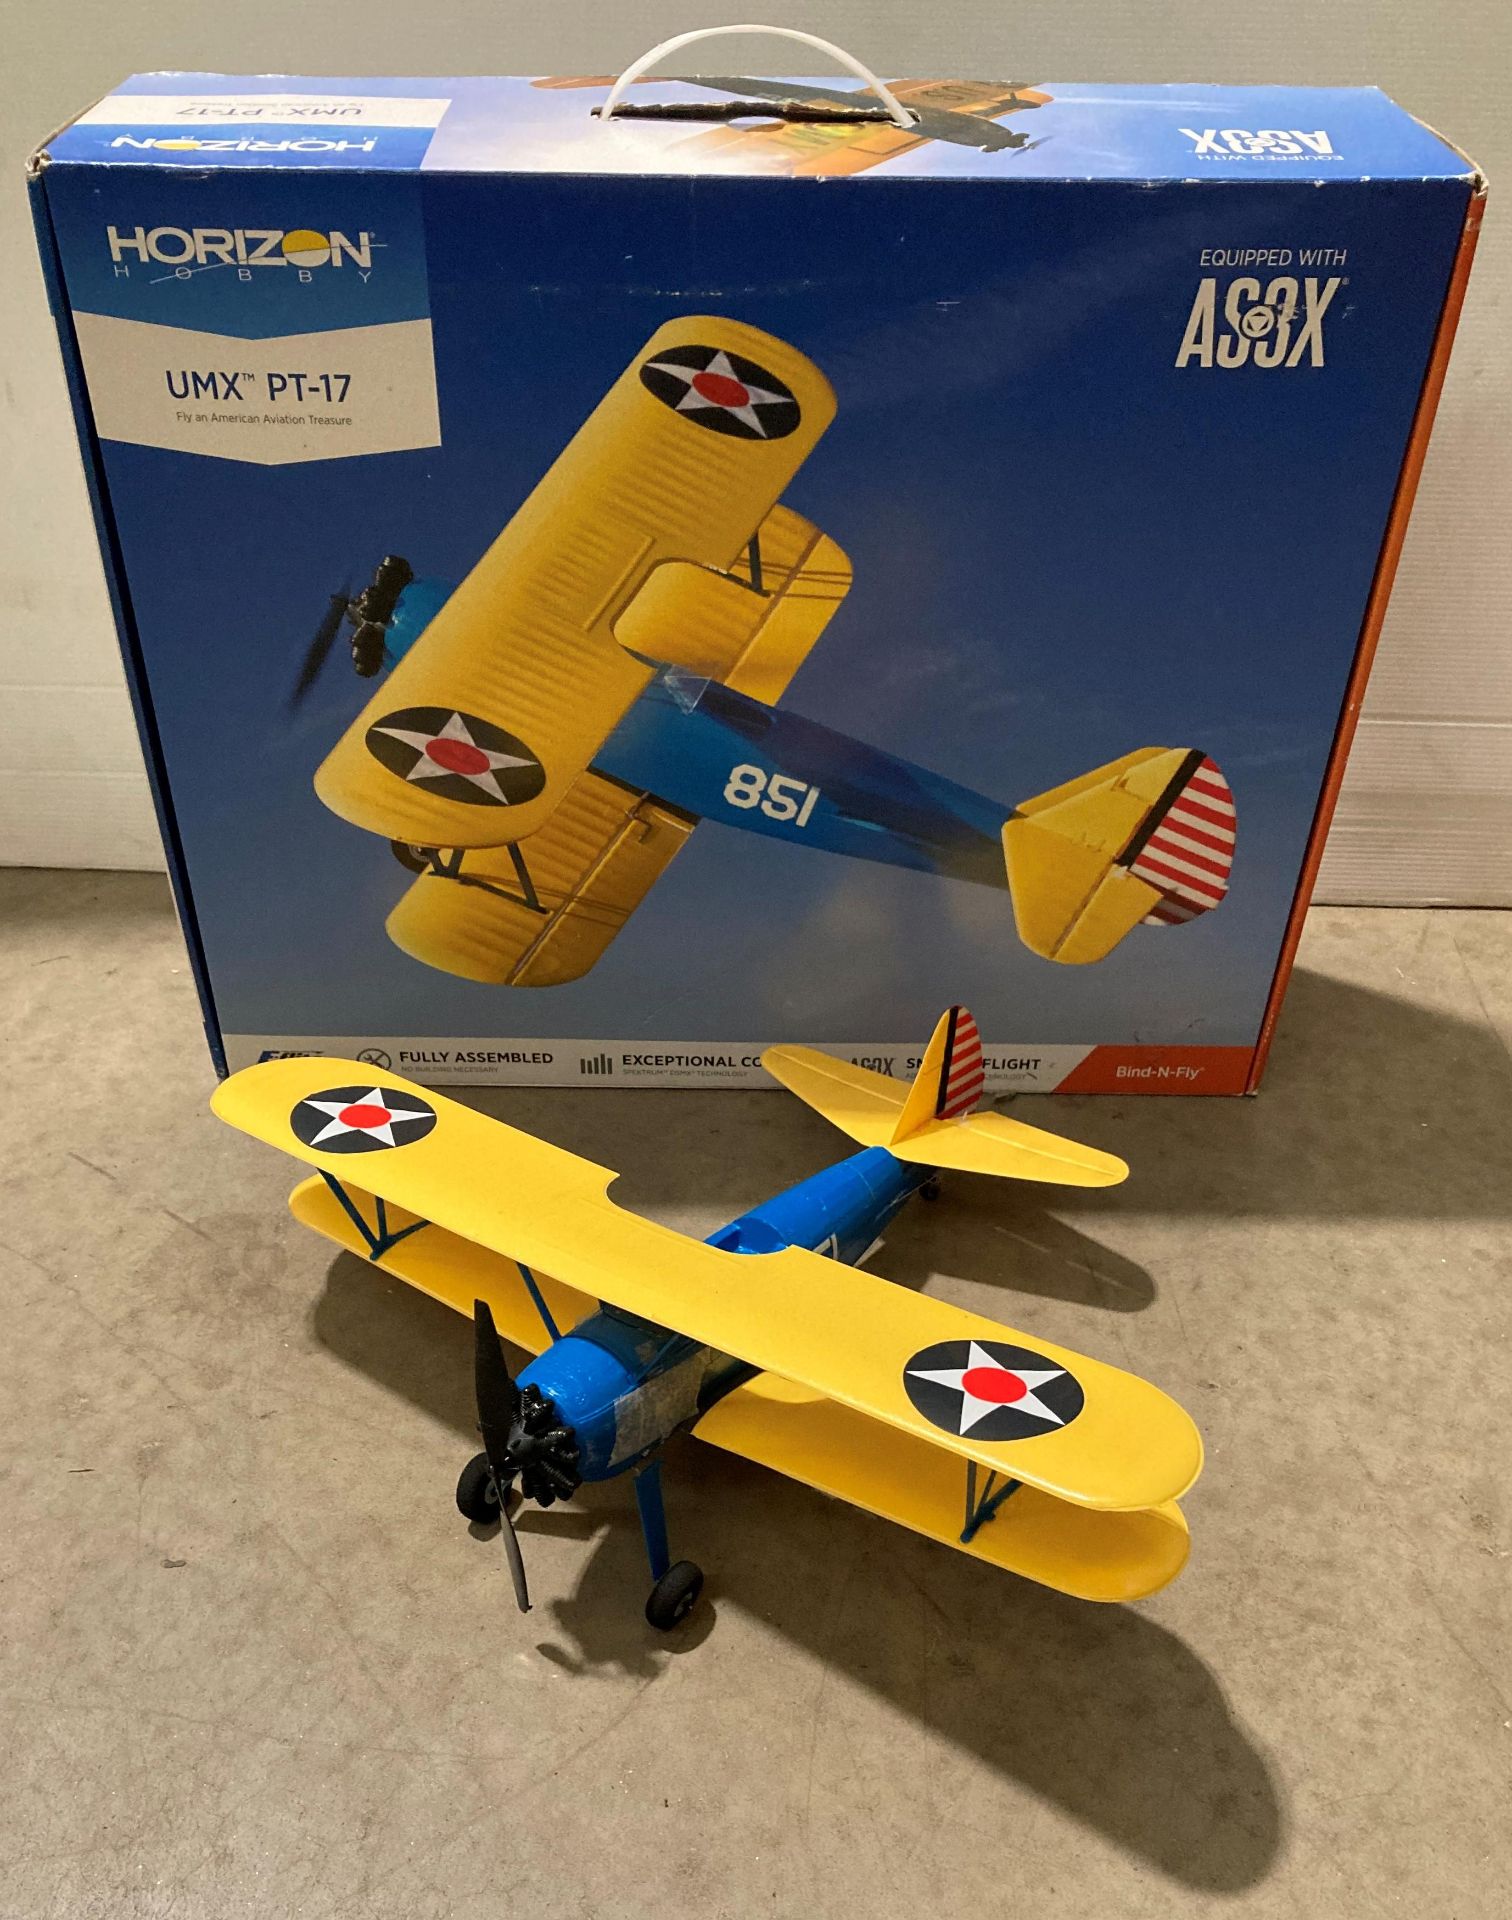 Horizon Hobby UMX PT-17 Bind-N-Fly model aeroplane in box (Saleroom location: S2 Ent rack)